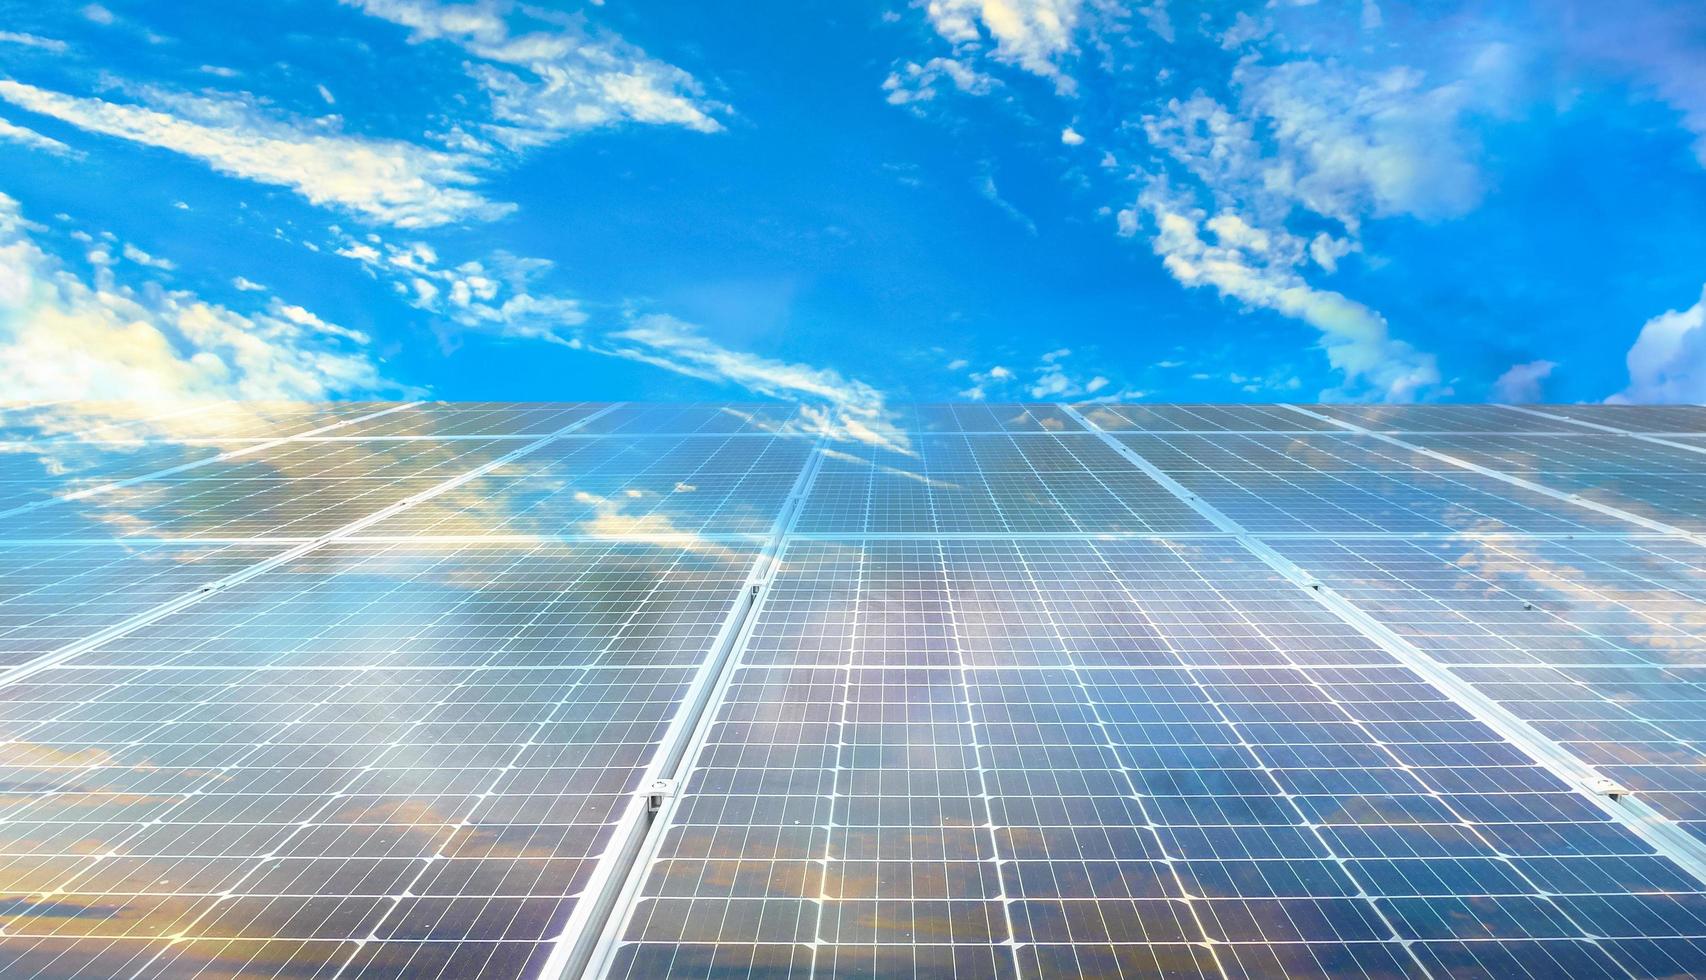 Solar panels on blue sky background photo